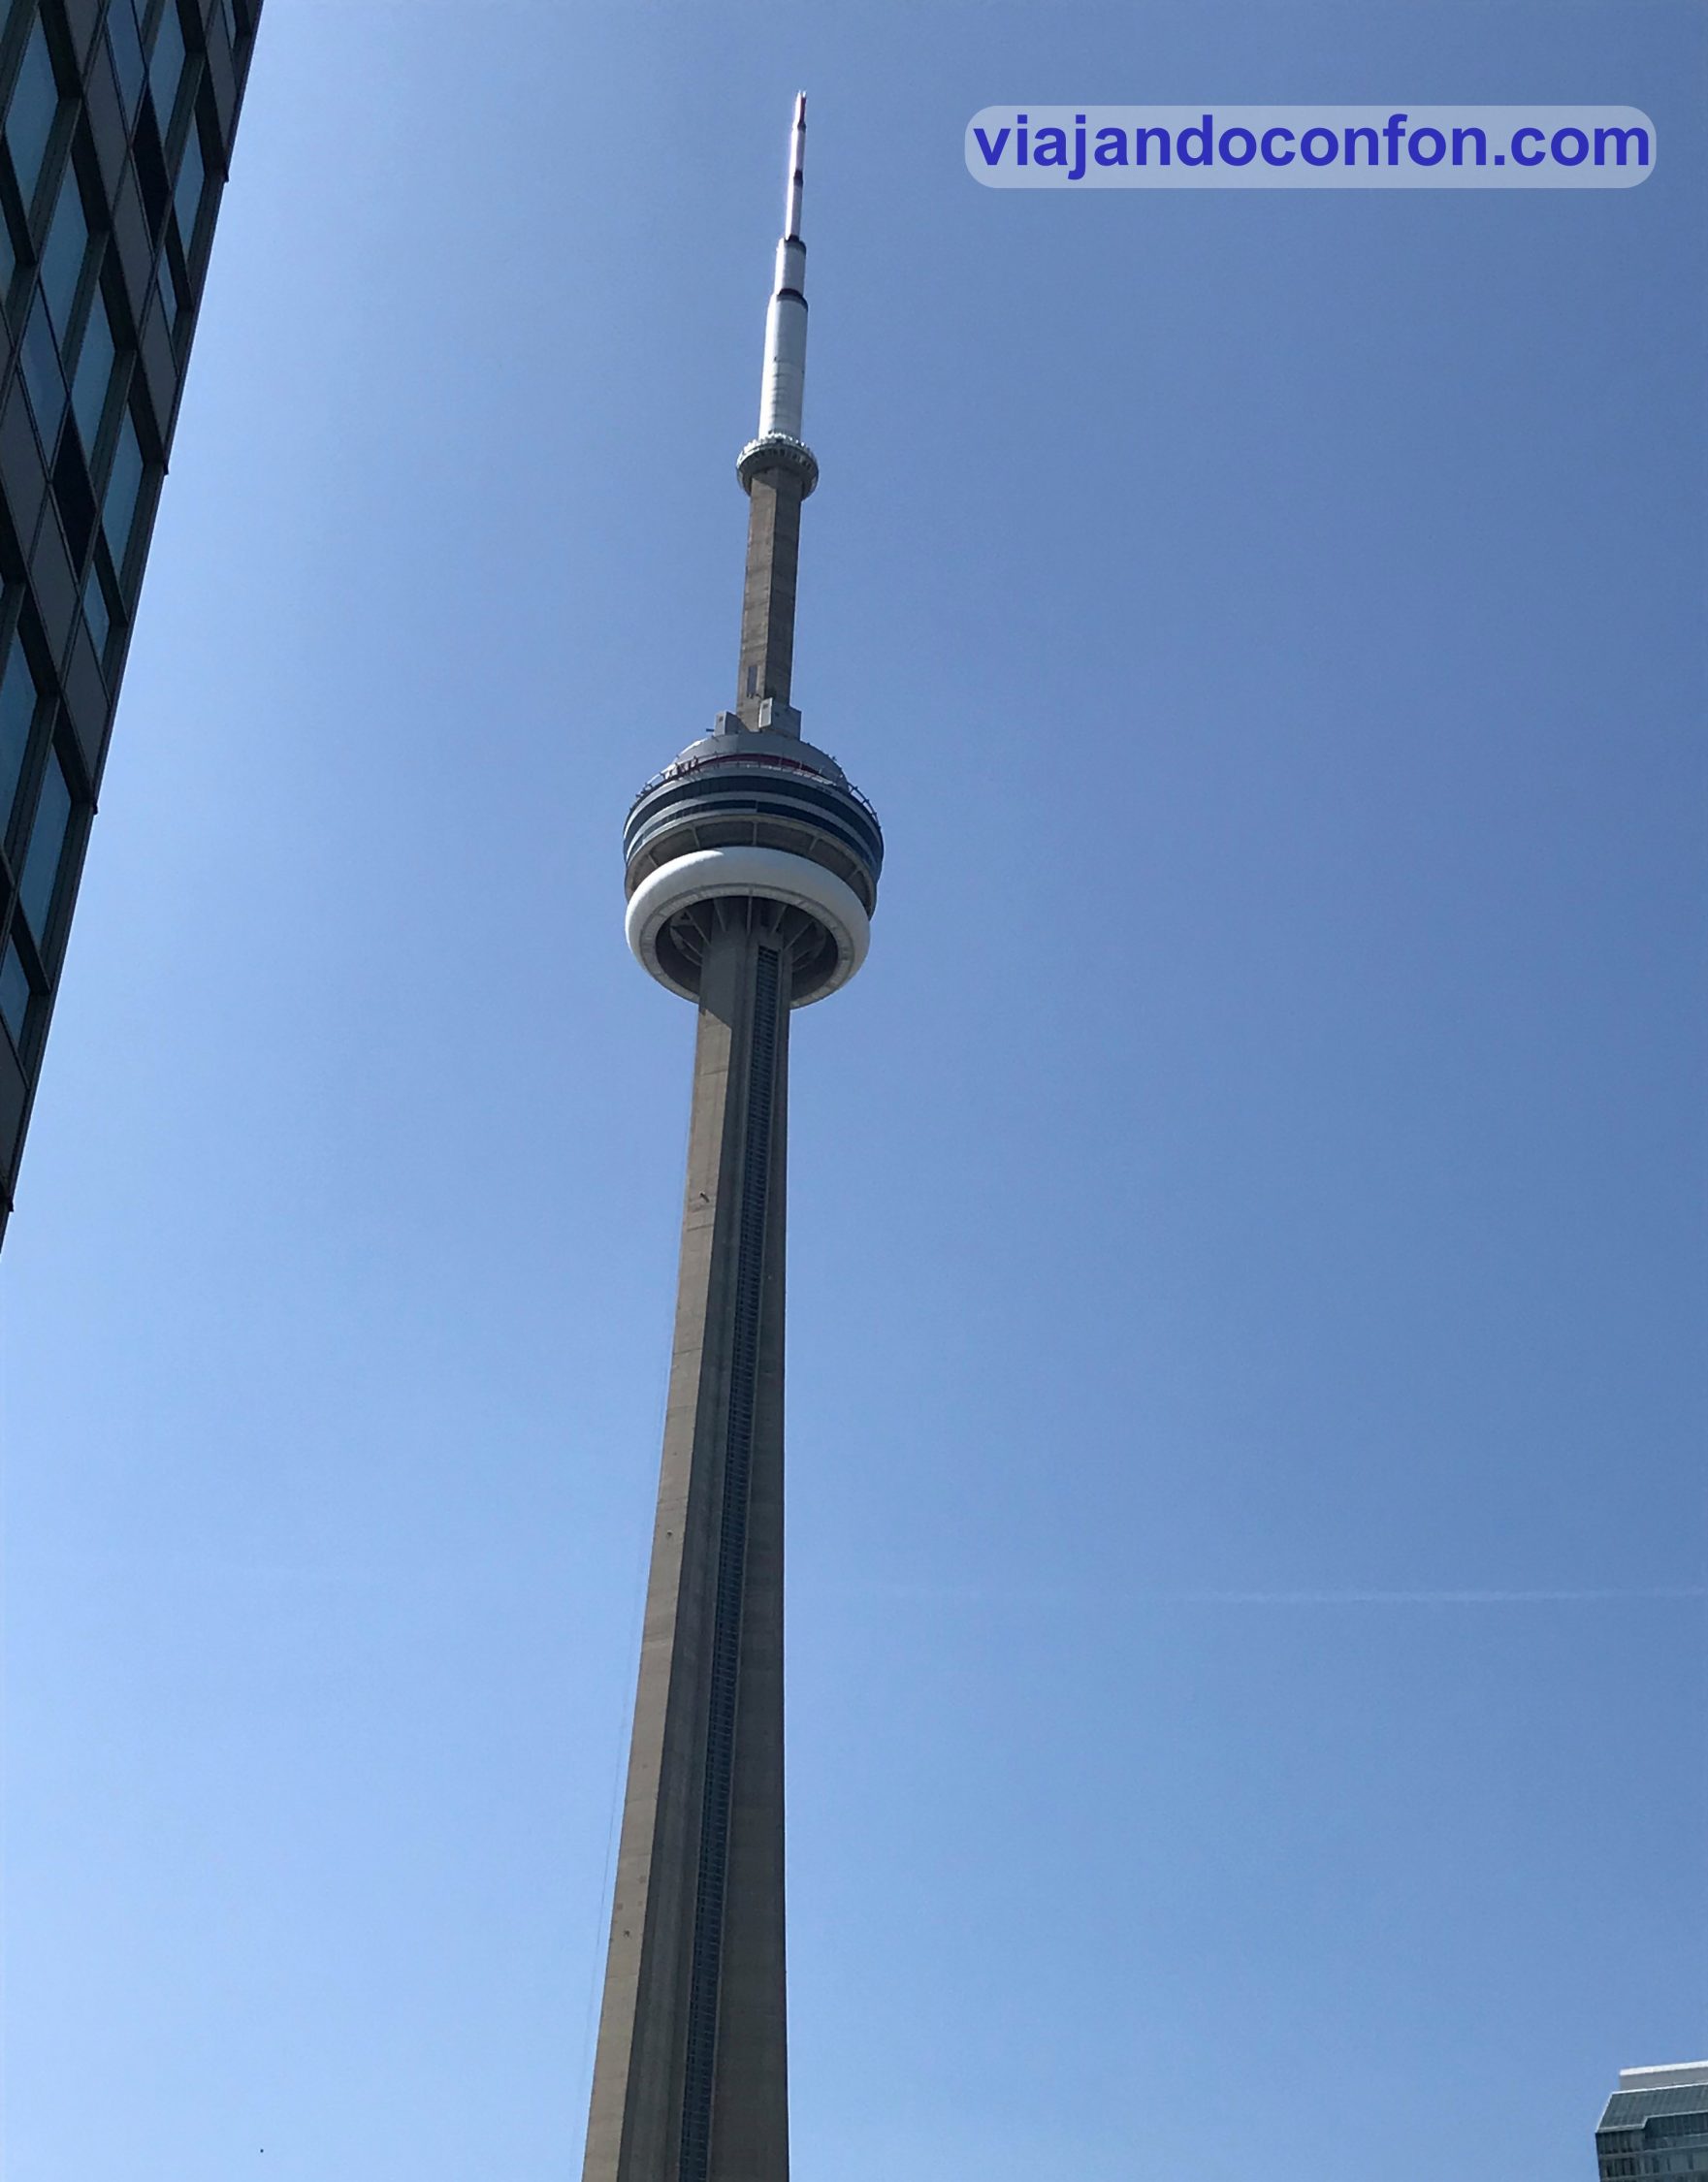 CN Tower
Toronto